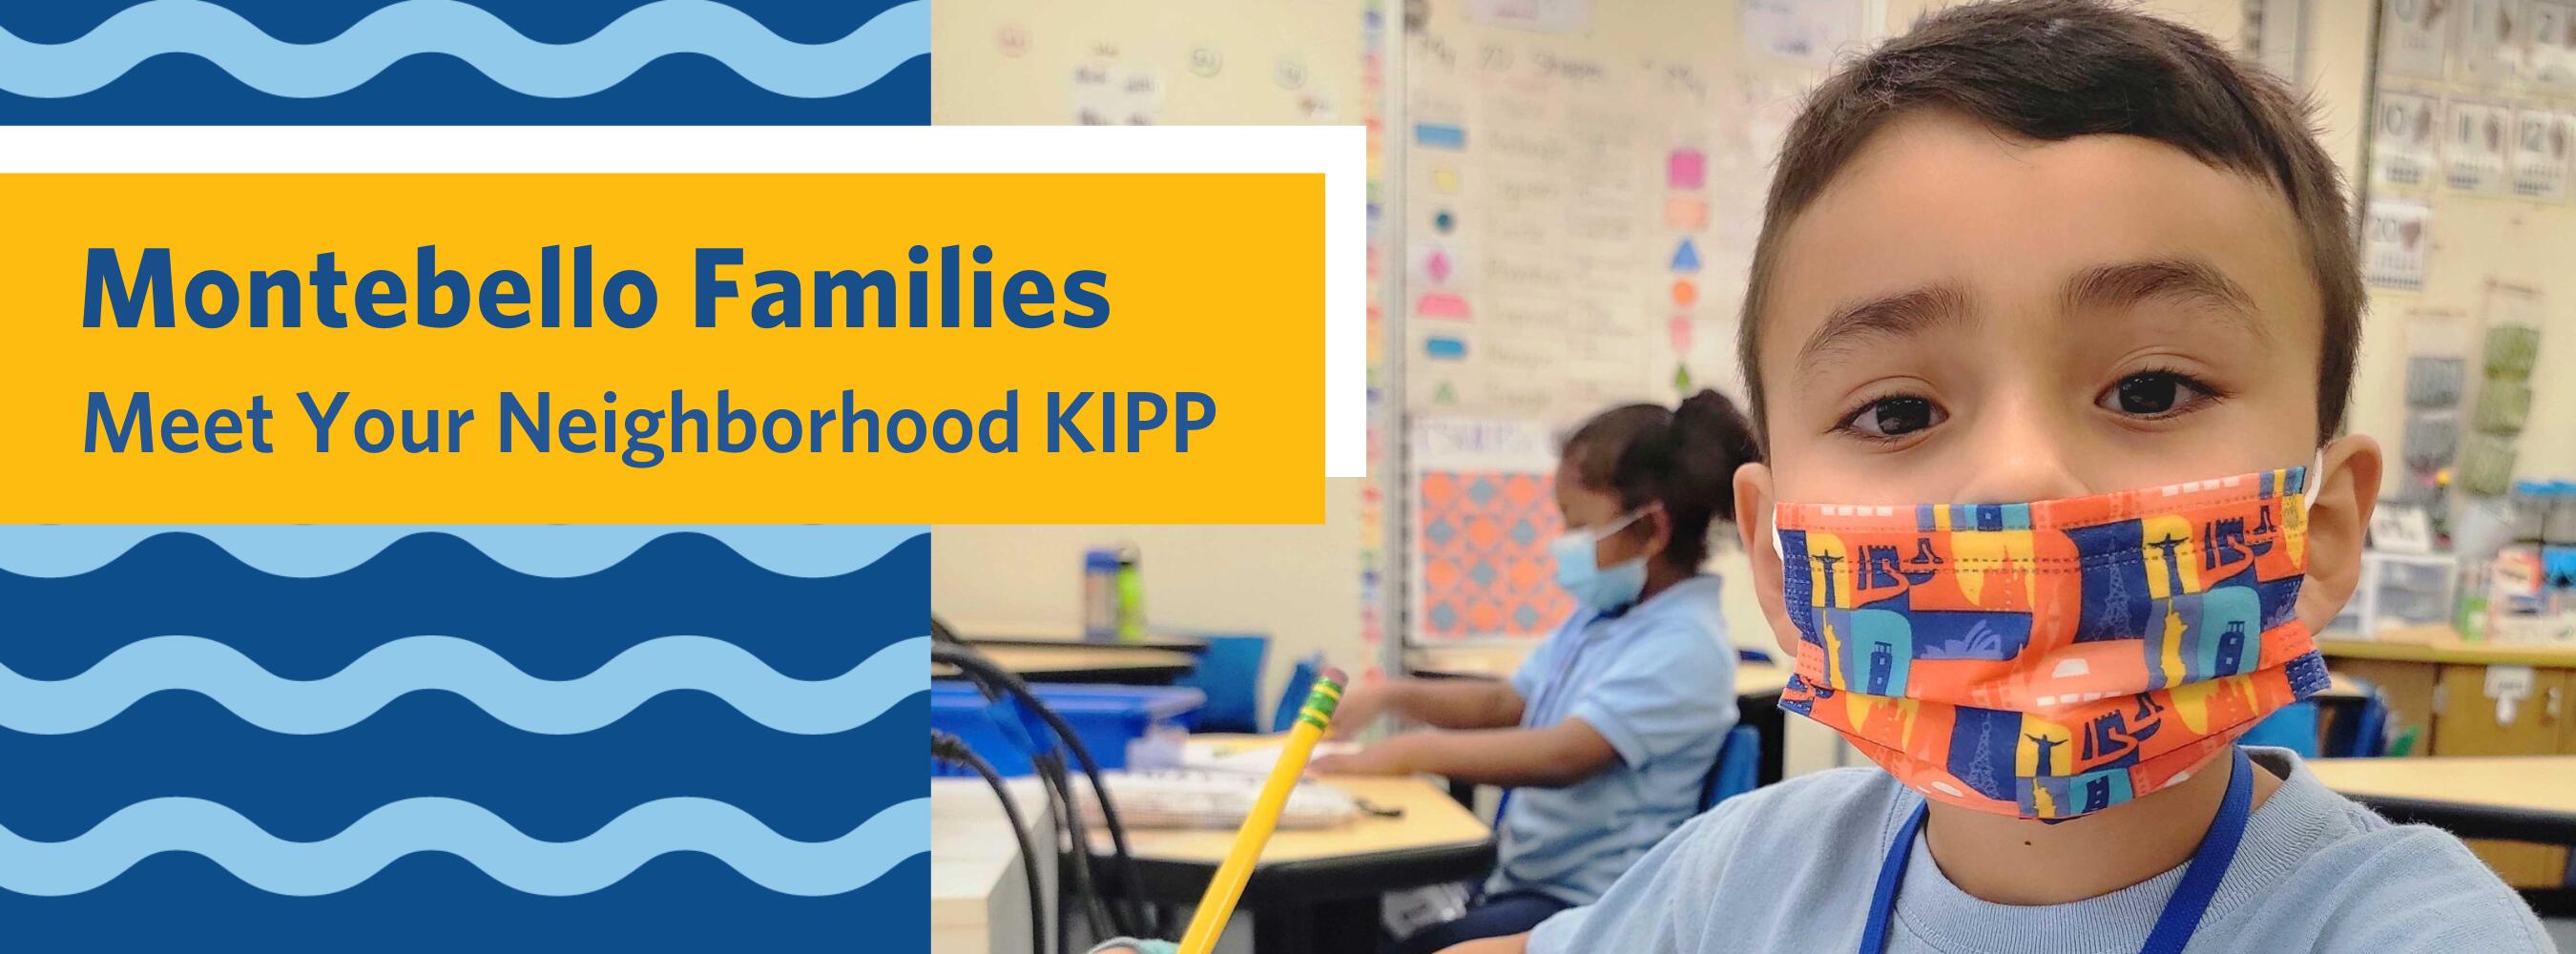 Montebello Families: Meet Your Neighborhood KIPP